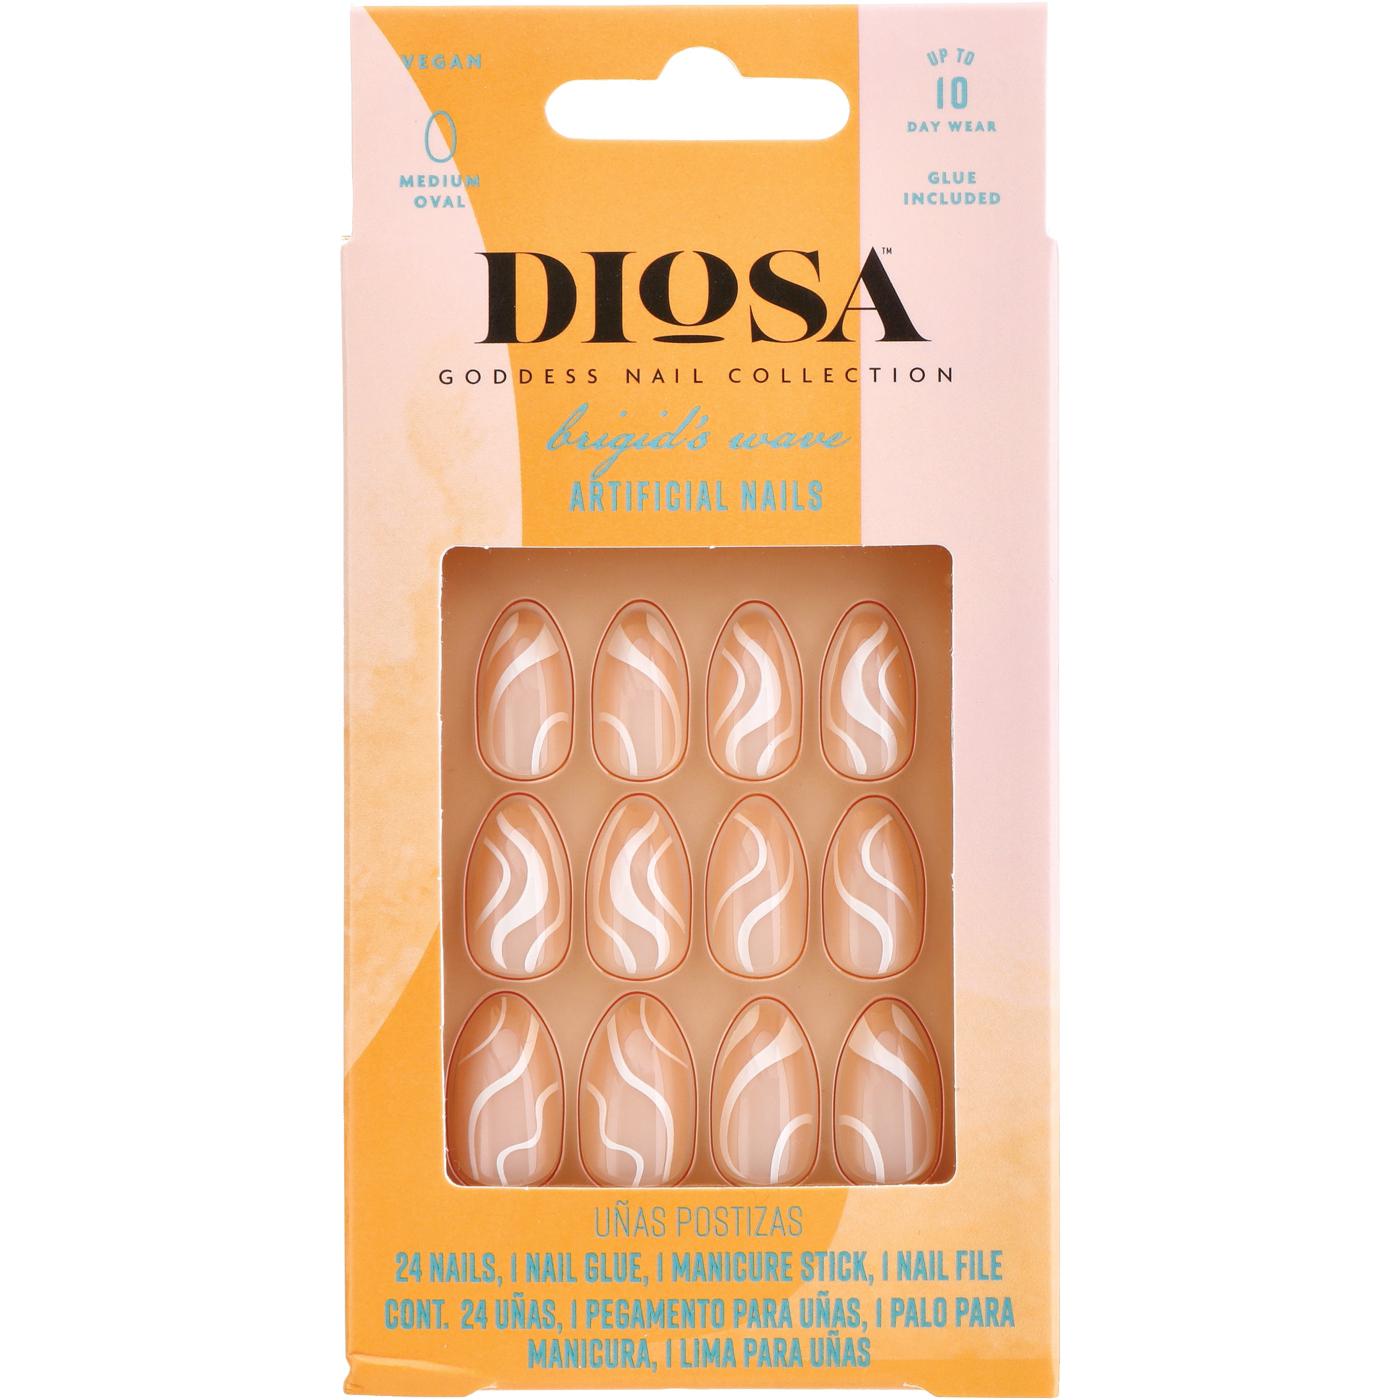 Diosa Brigid's Wave Artificial Nails - Beige & White Swirls; image 1 of 4